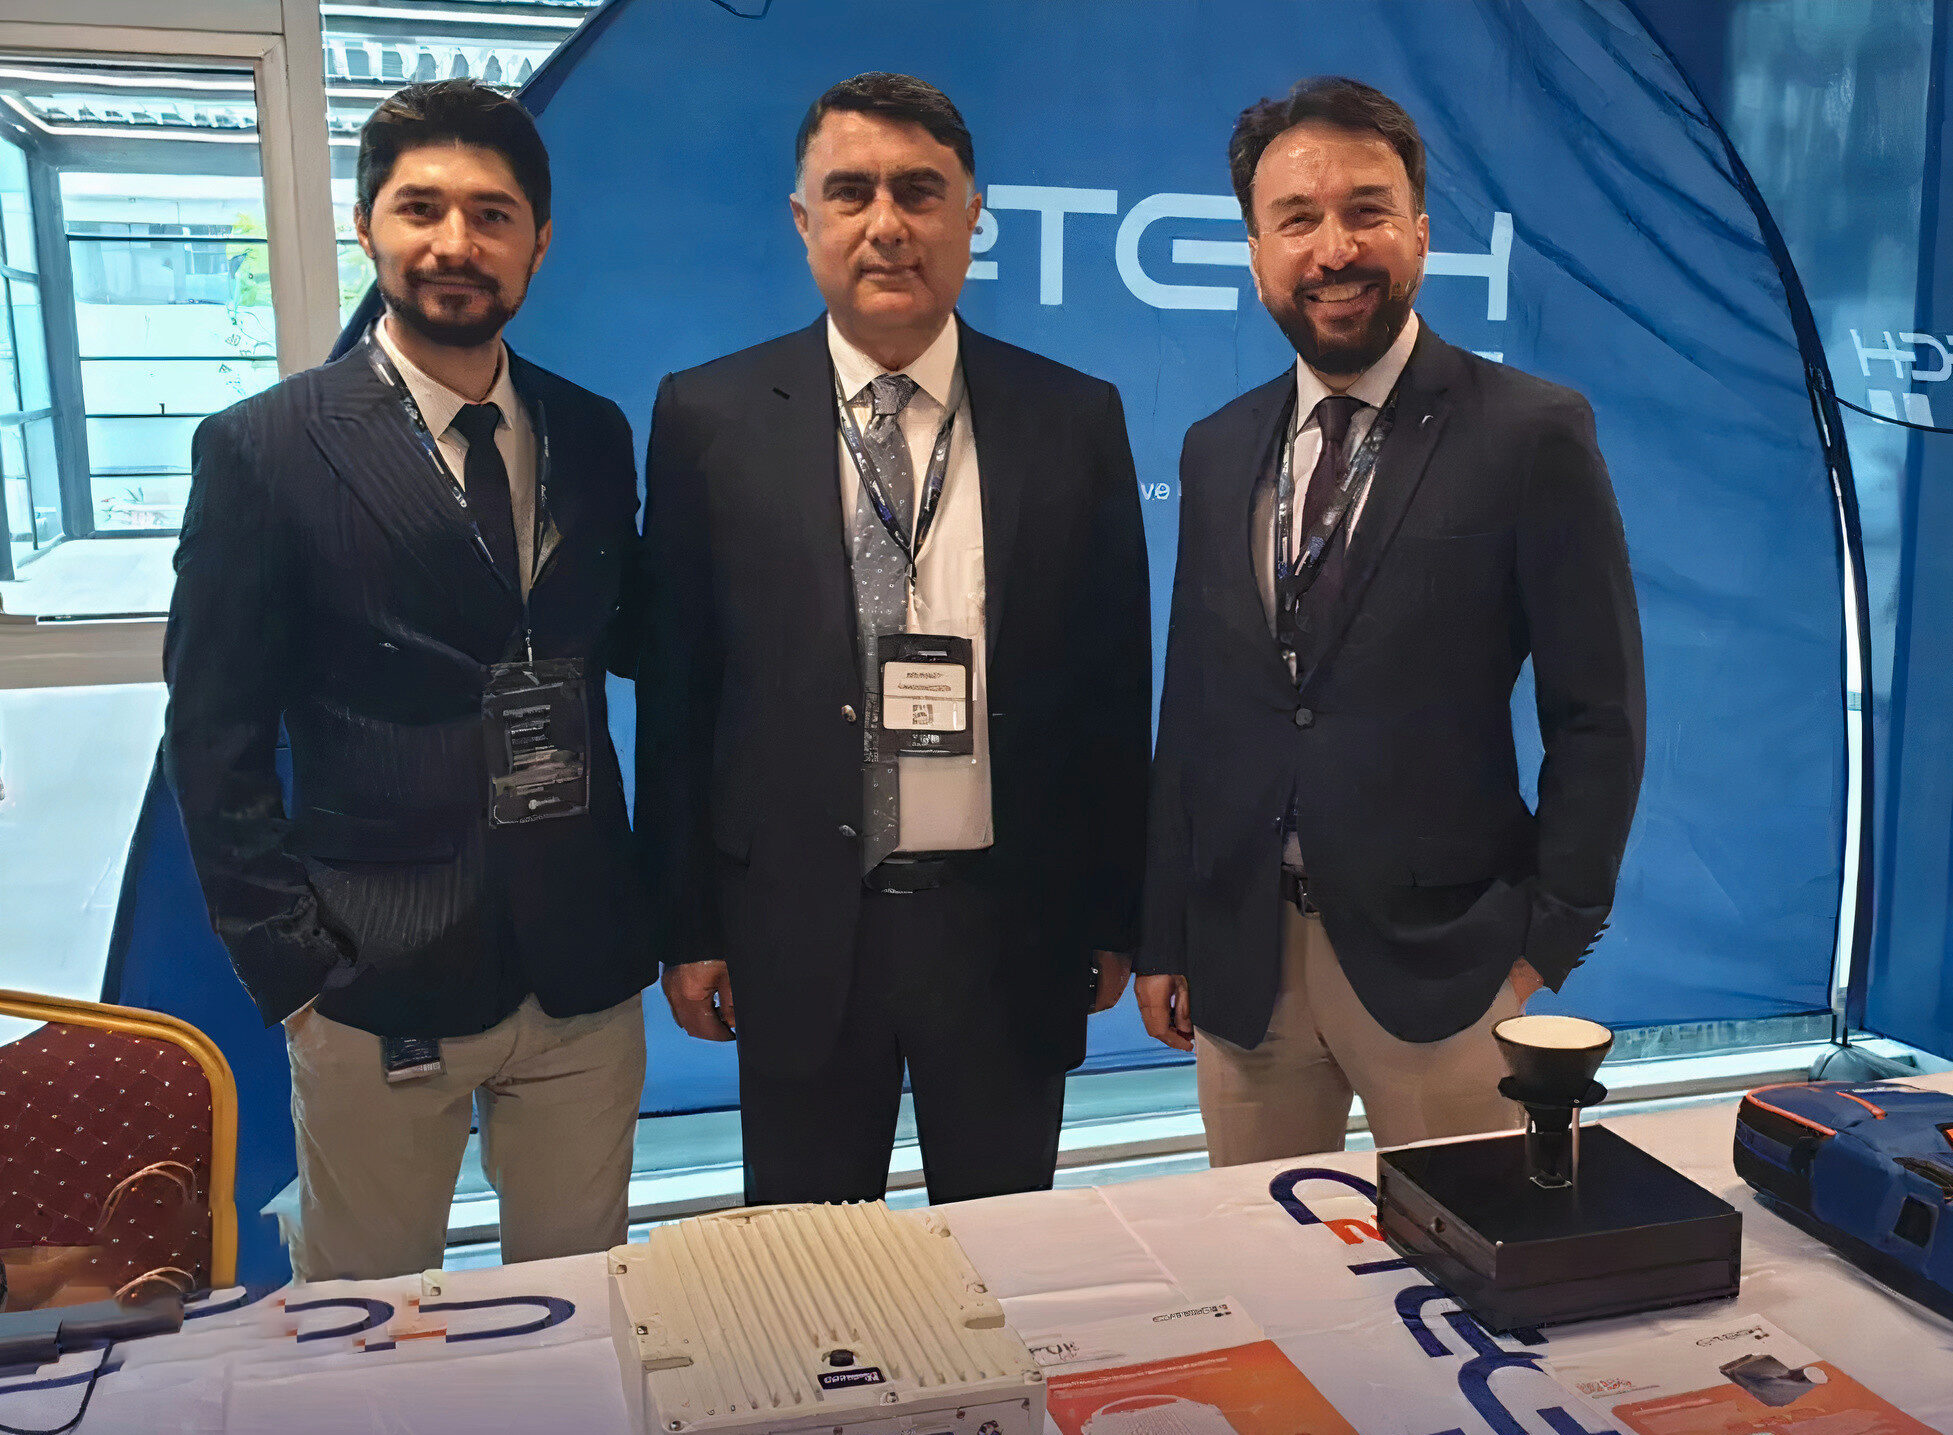 CTech | CTech attended the 5G Summit Turkey event